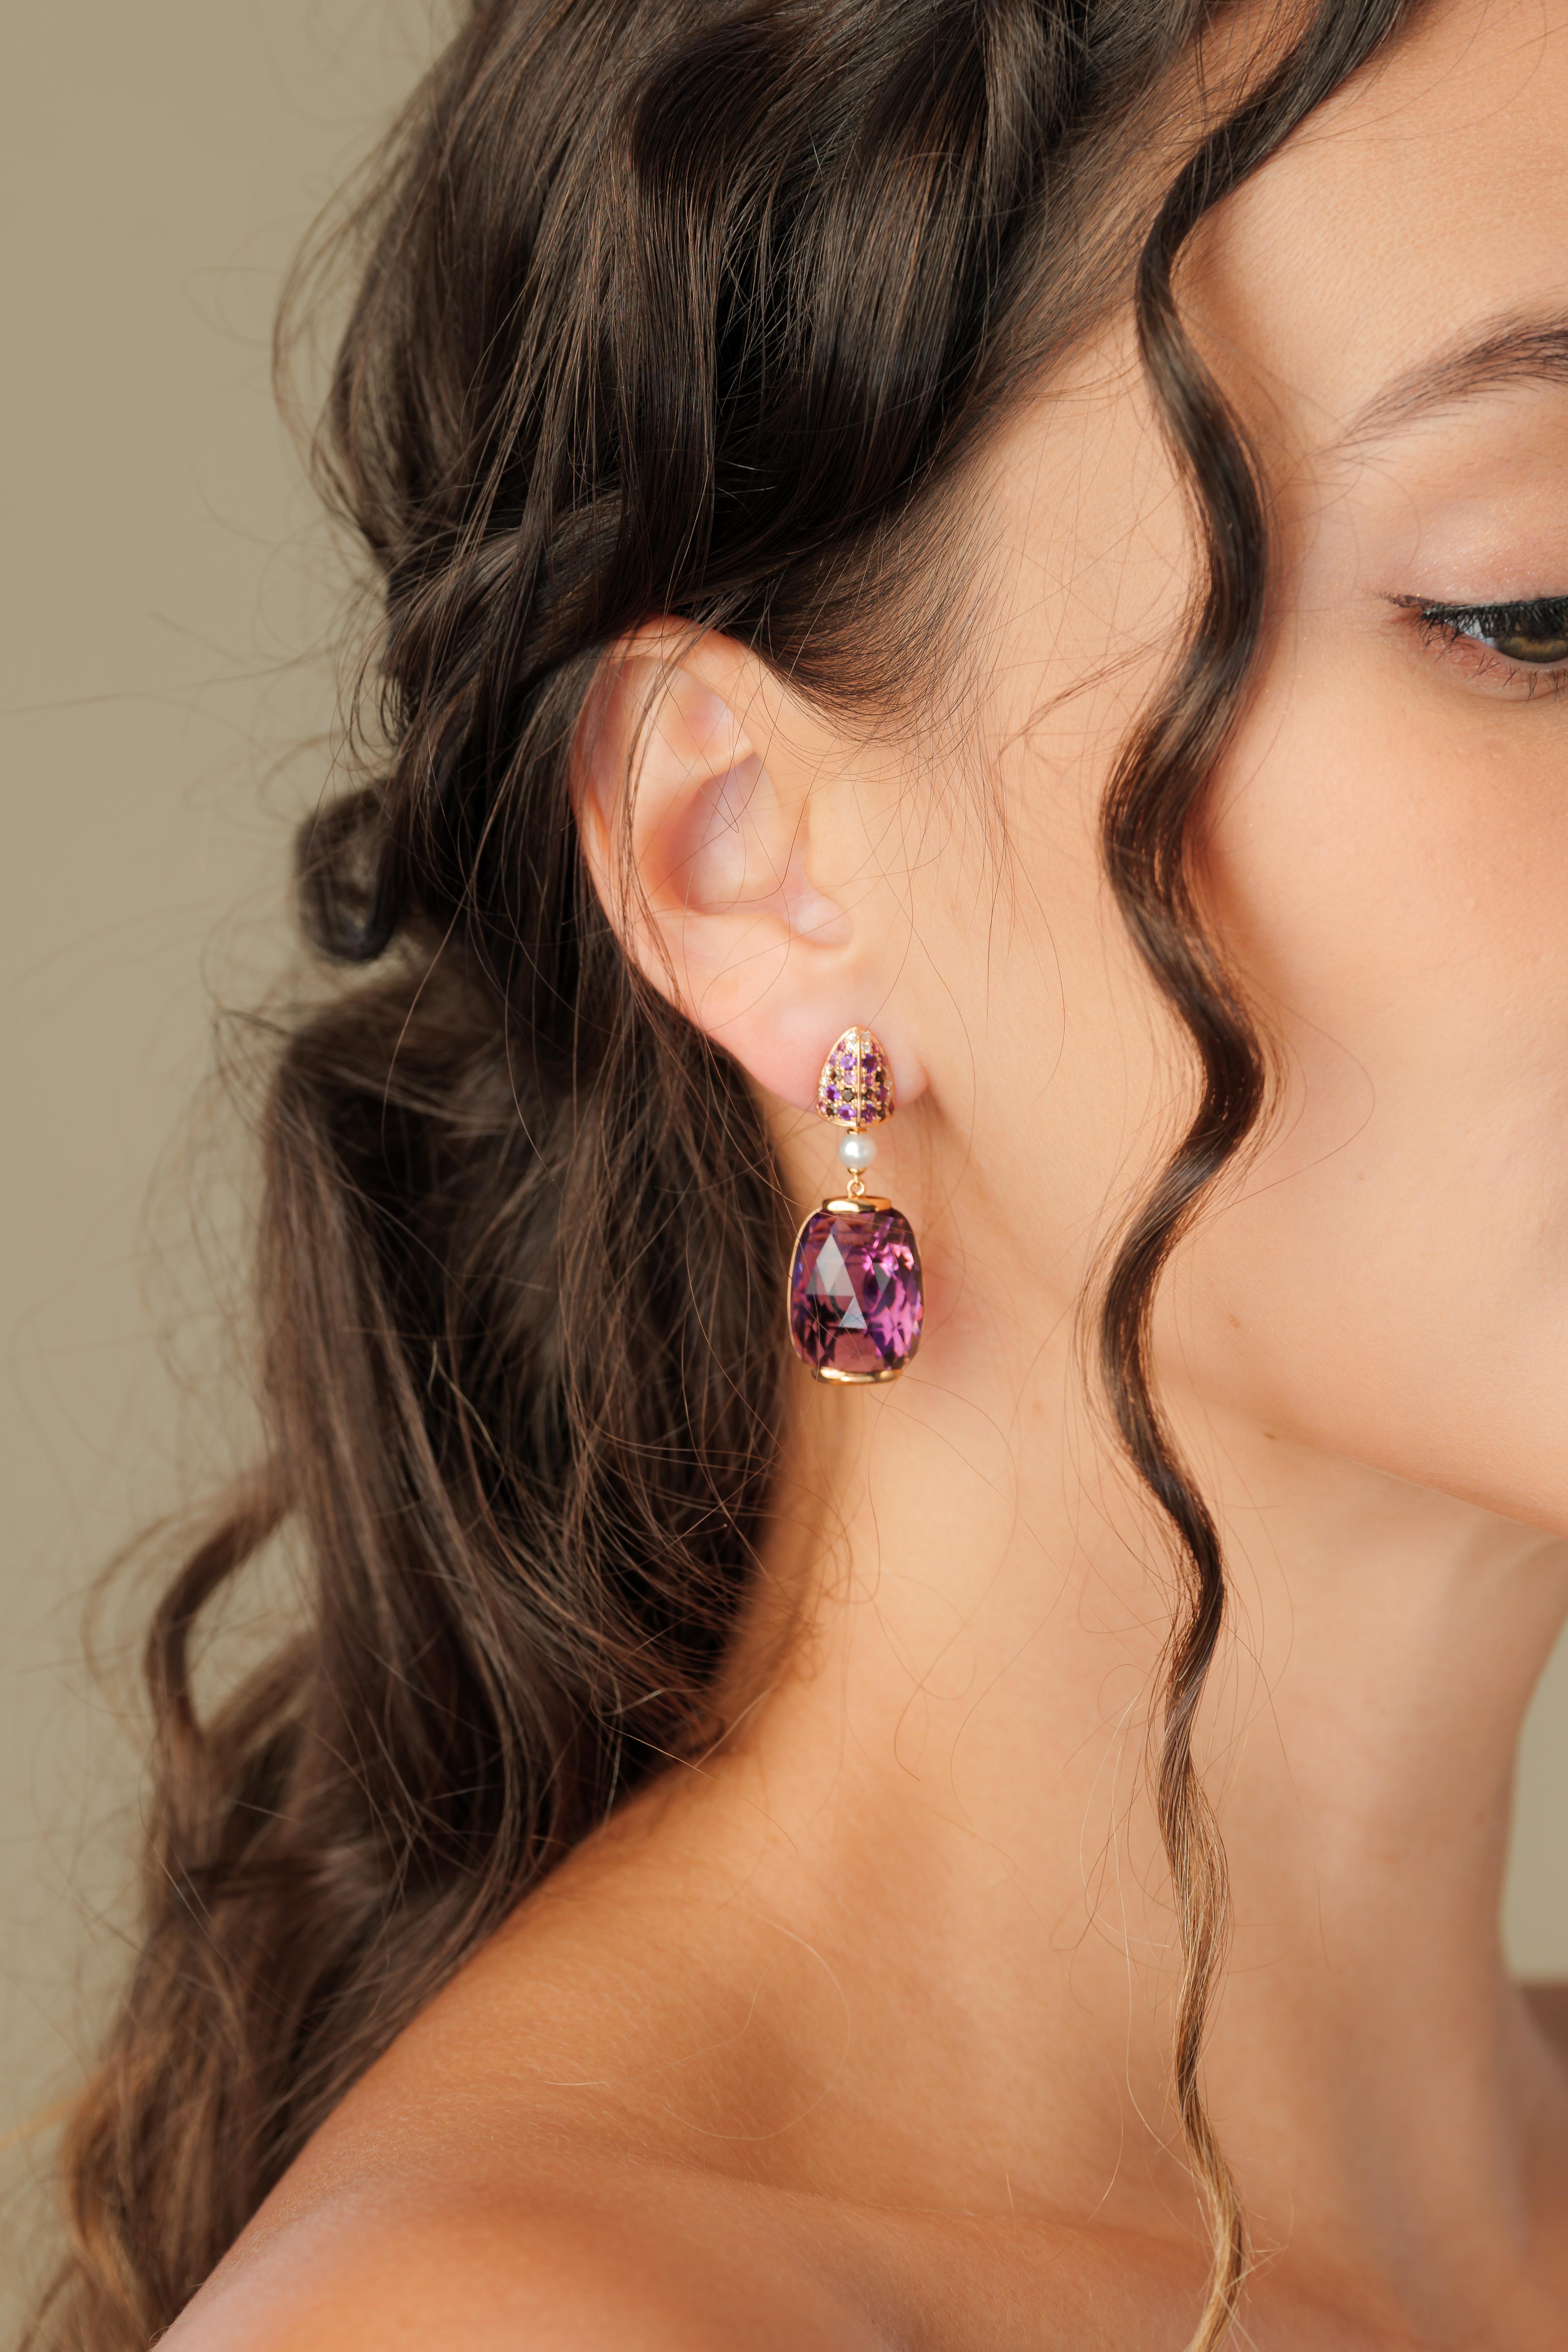 Cabochon 33 Carat Amethyst Earrings with Gemstones, Pearl & Diamond in 18 Karat Rose Gold